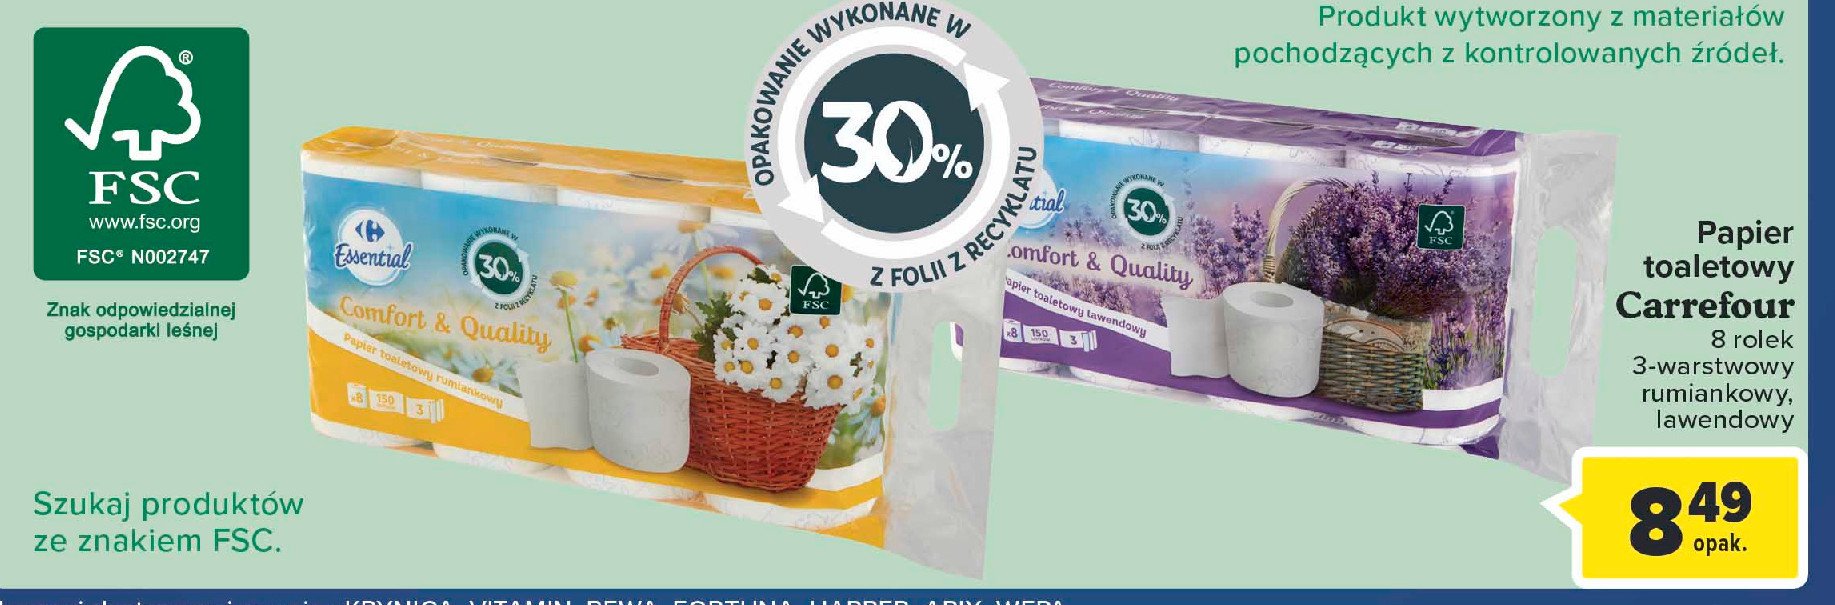 Papier toaletowy lawendowy Carrefour essential promocje